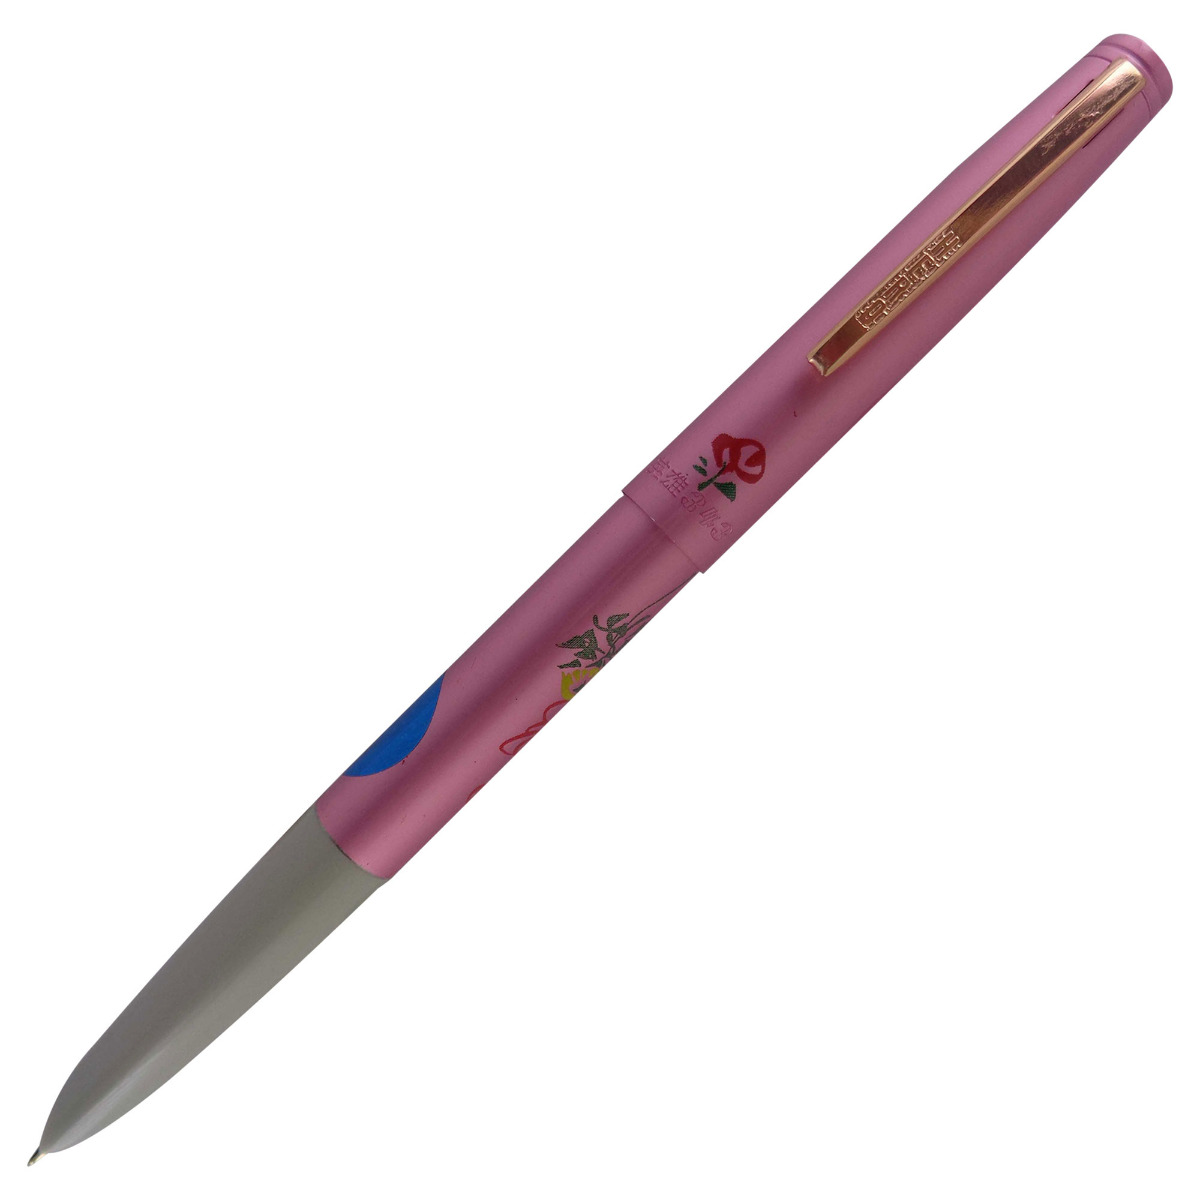 Hero 343 Model: 14515 Light Pink color body with golden color clip fine tp cap type fountain pen